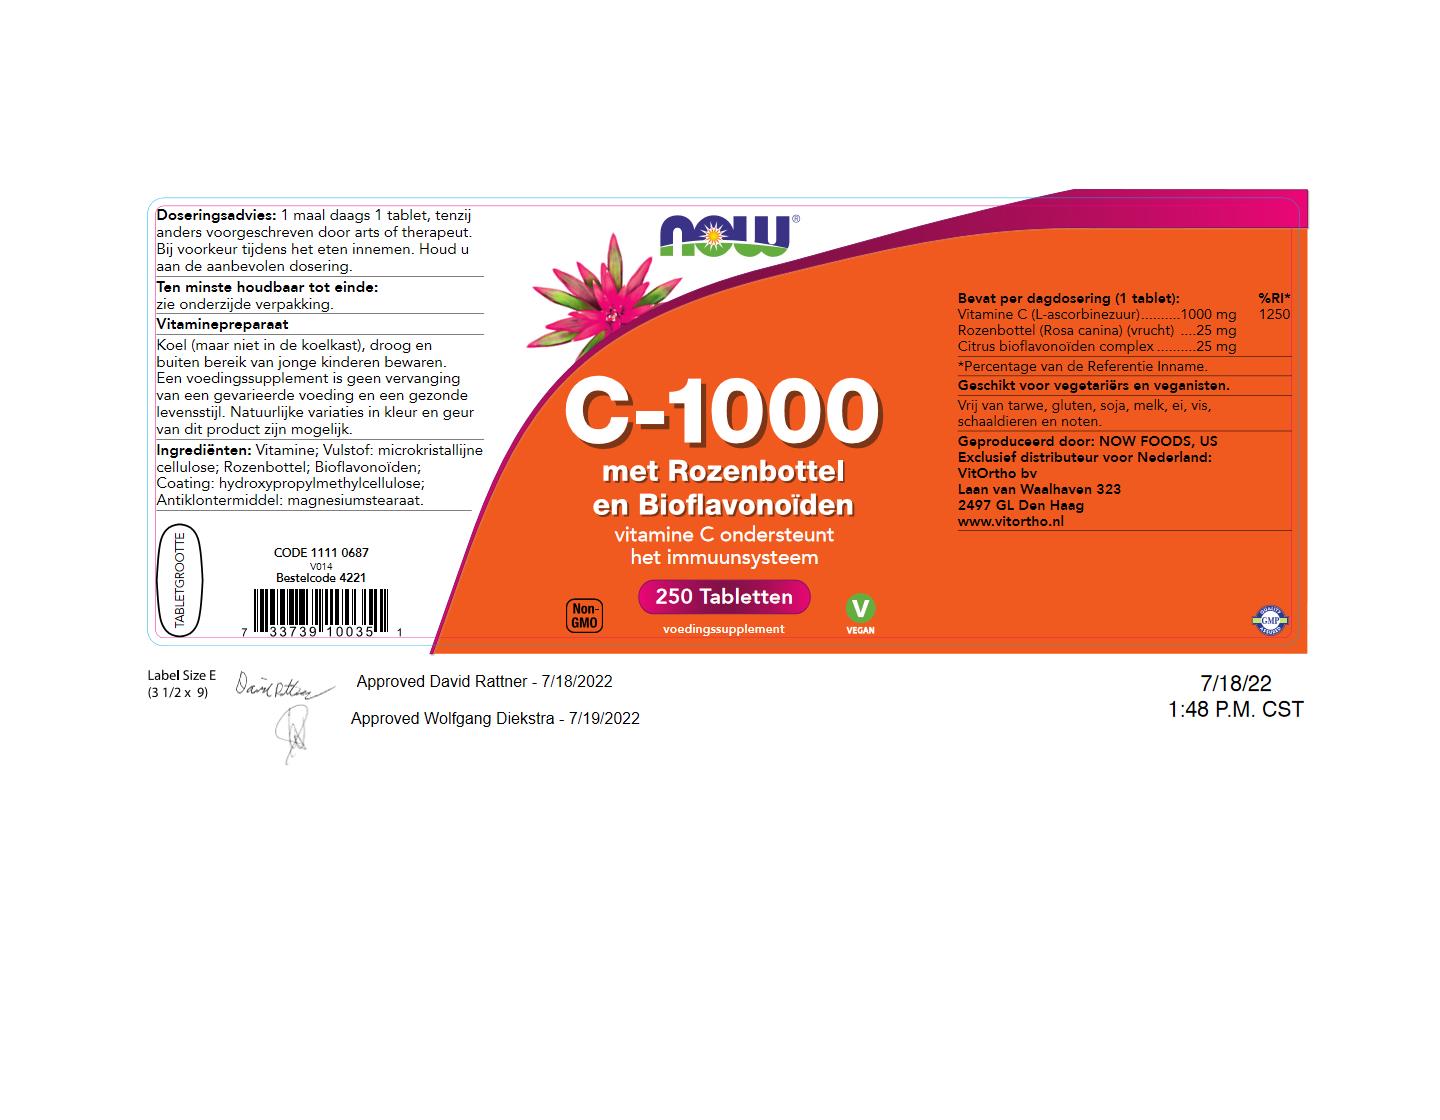 C-1000 met Rozenbottel & Bioflavonoïden